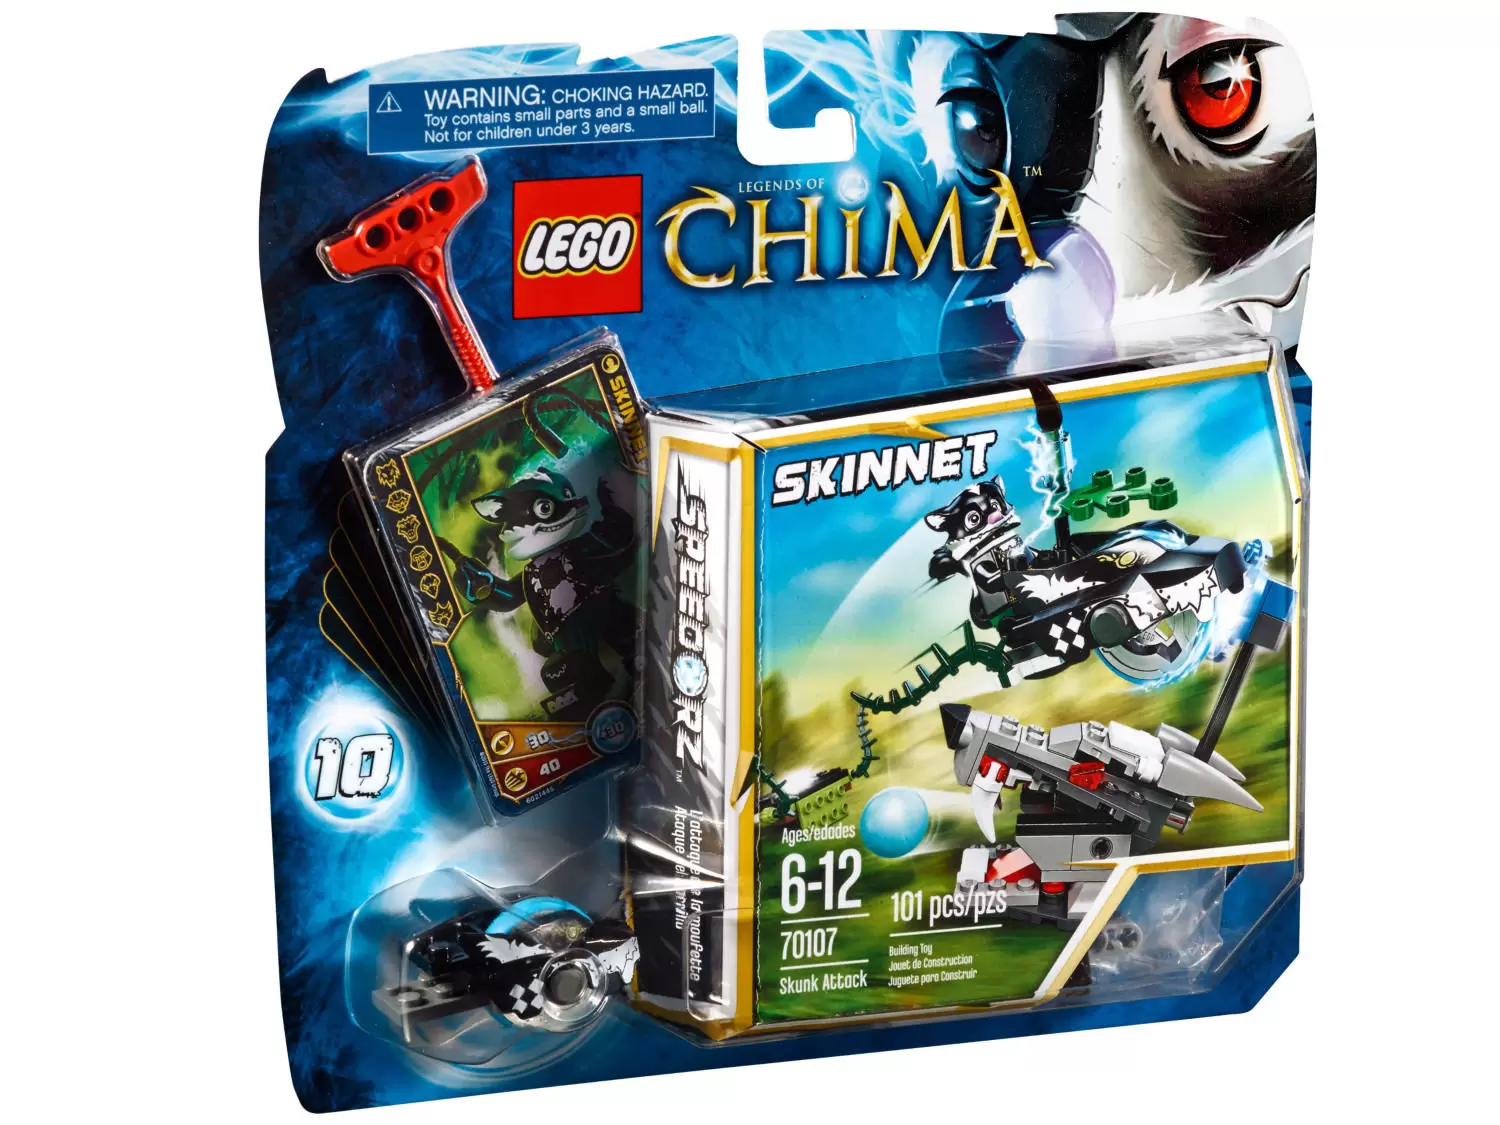 LEGO Legends of Chima - Skunk Attack